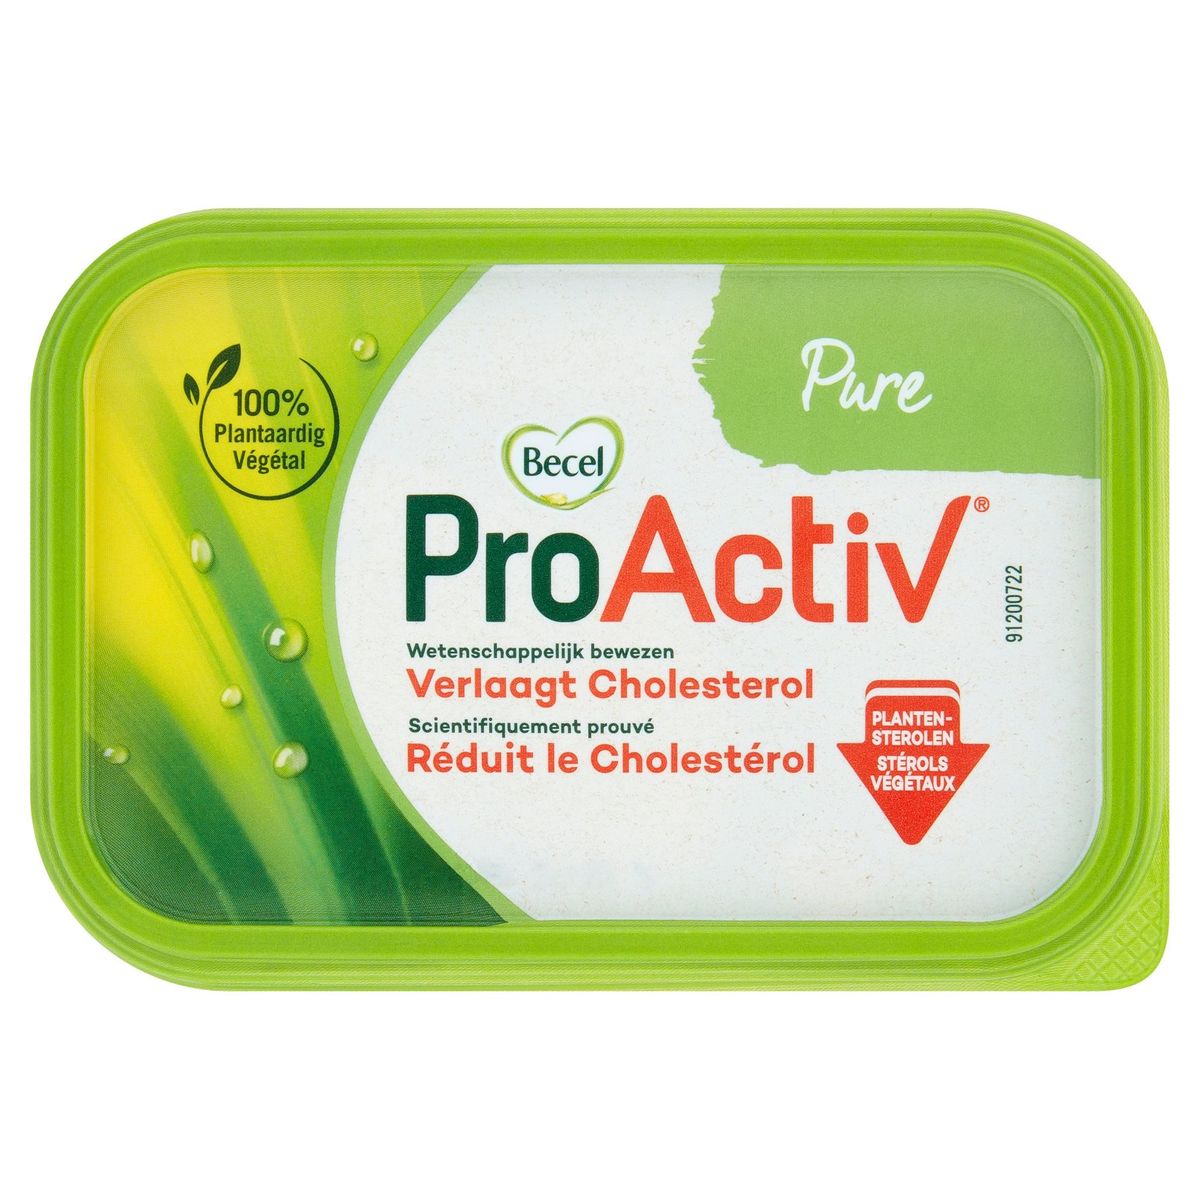 ProActiv | Verlaagt cholesterol | Pure | 250g